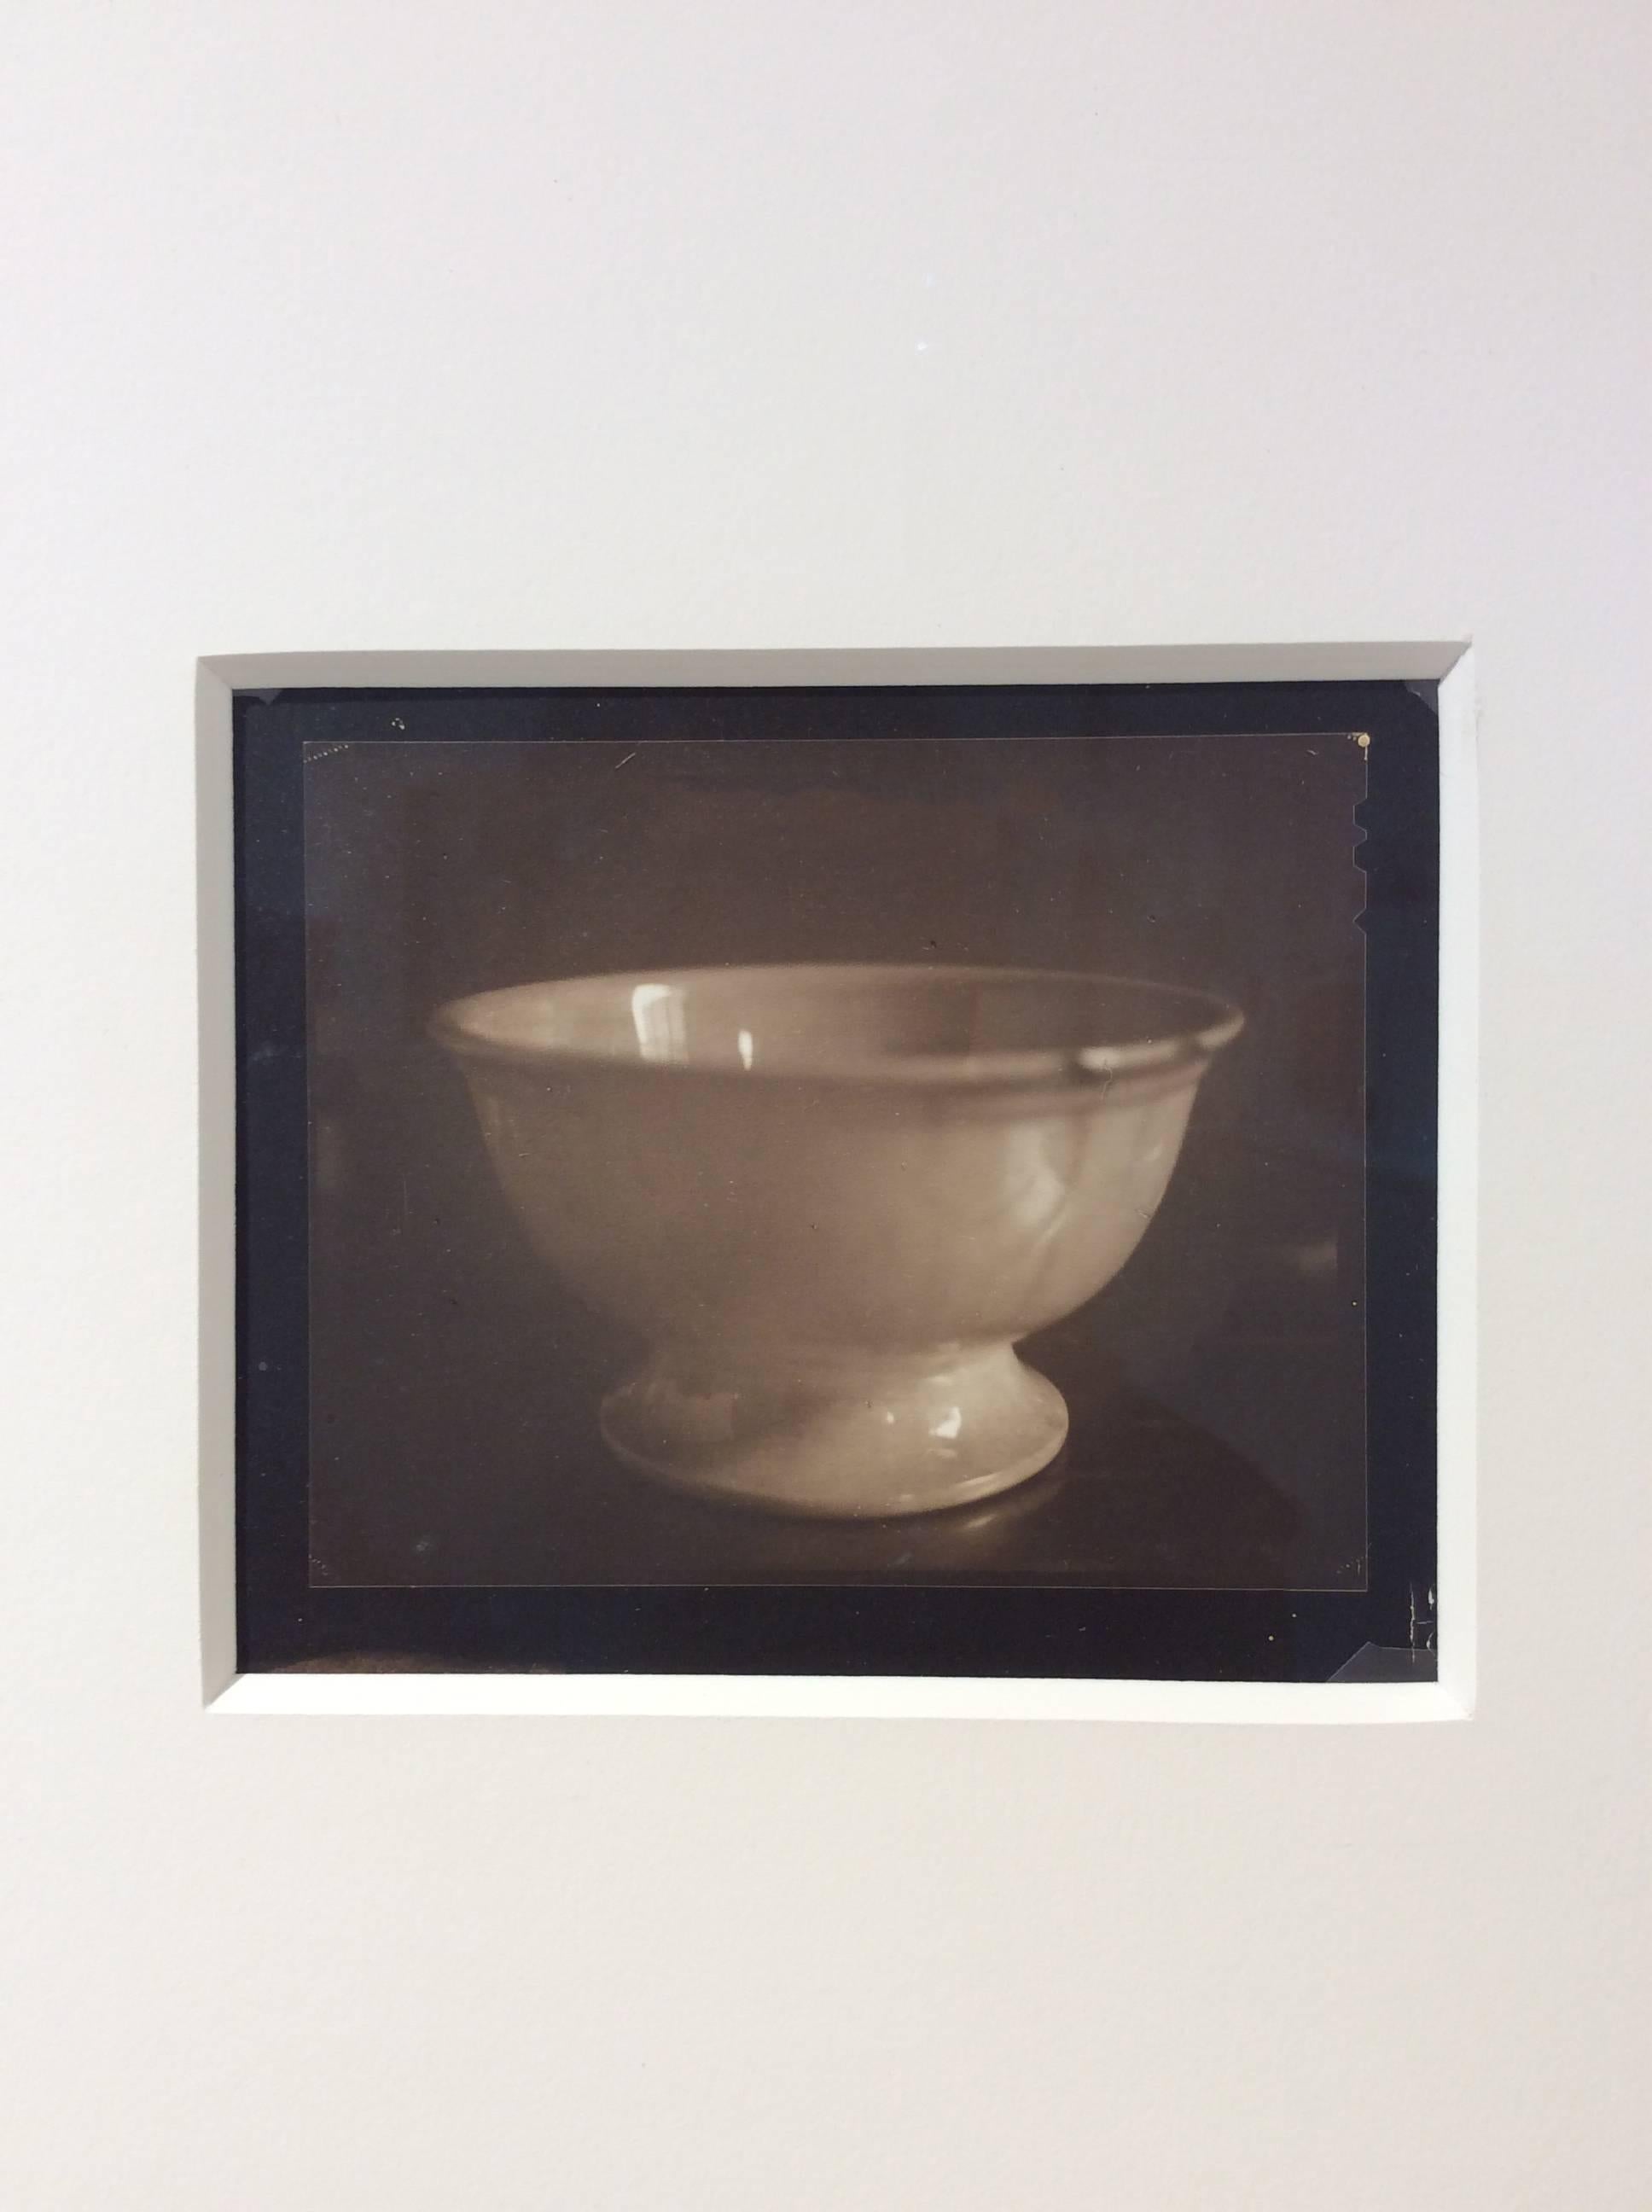 Stoneware Bowl (Small Sepia Toned Still Life Photograph of White Ceramic Bowl) For Sale 1